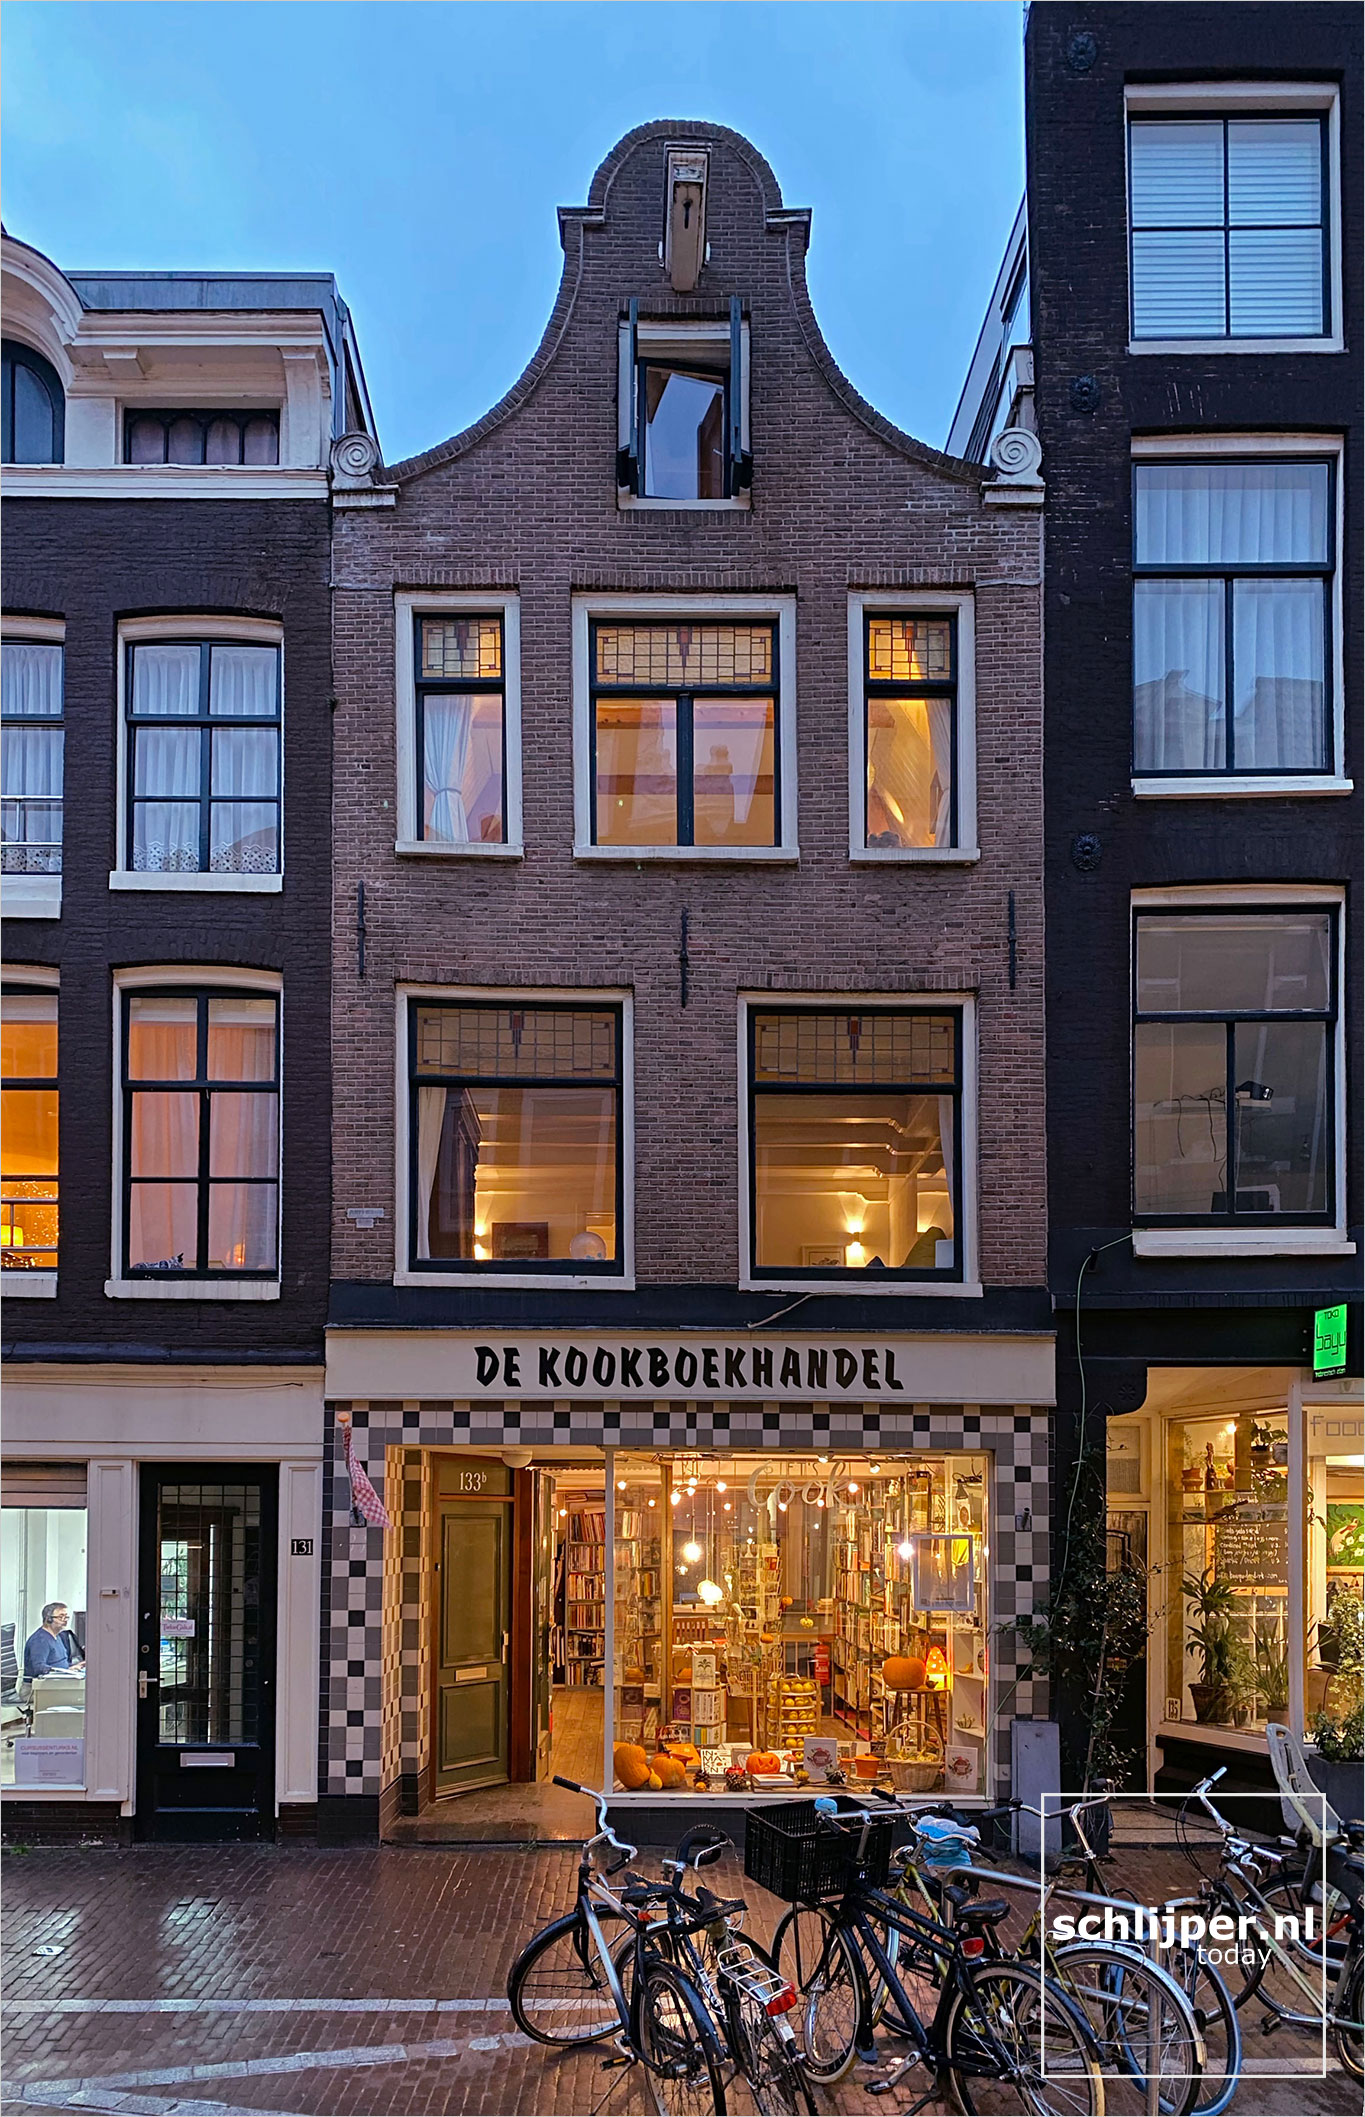 Nederland, Amsterdam, 30 oktober 2020